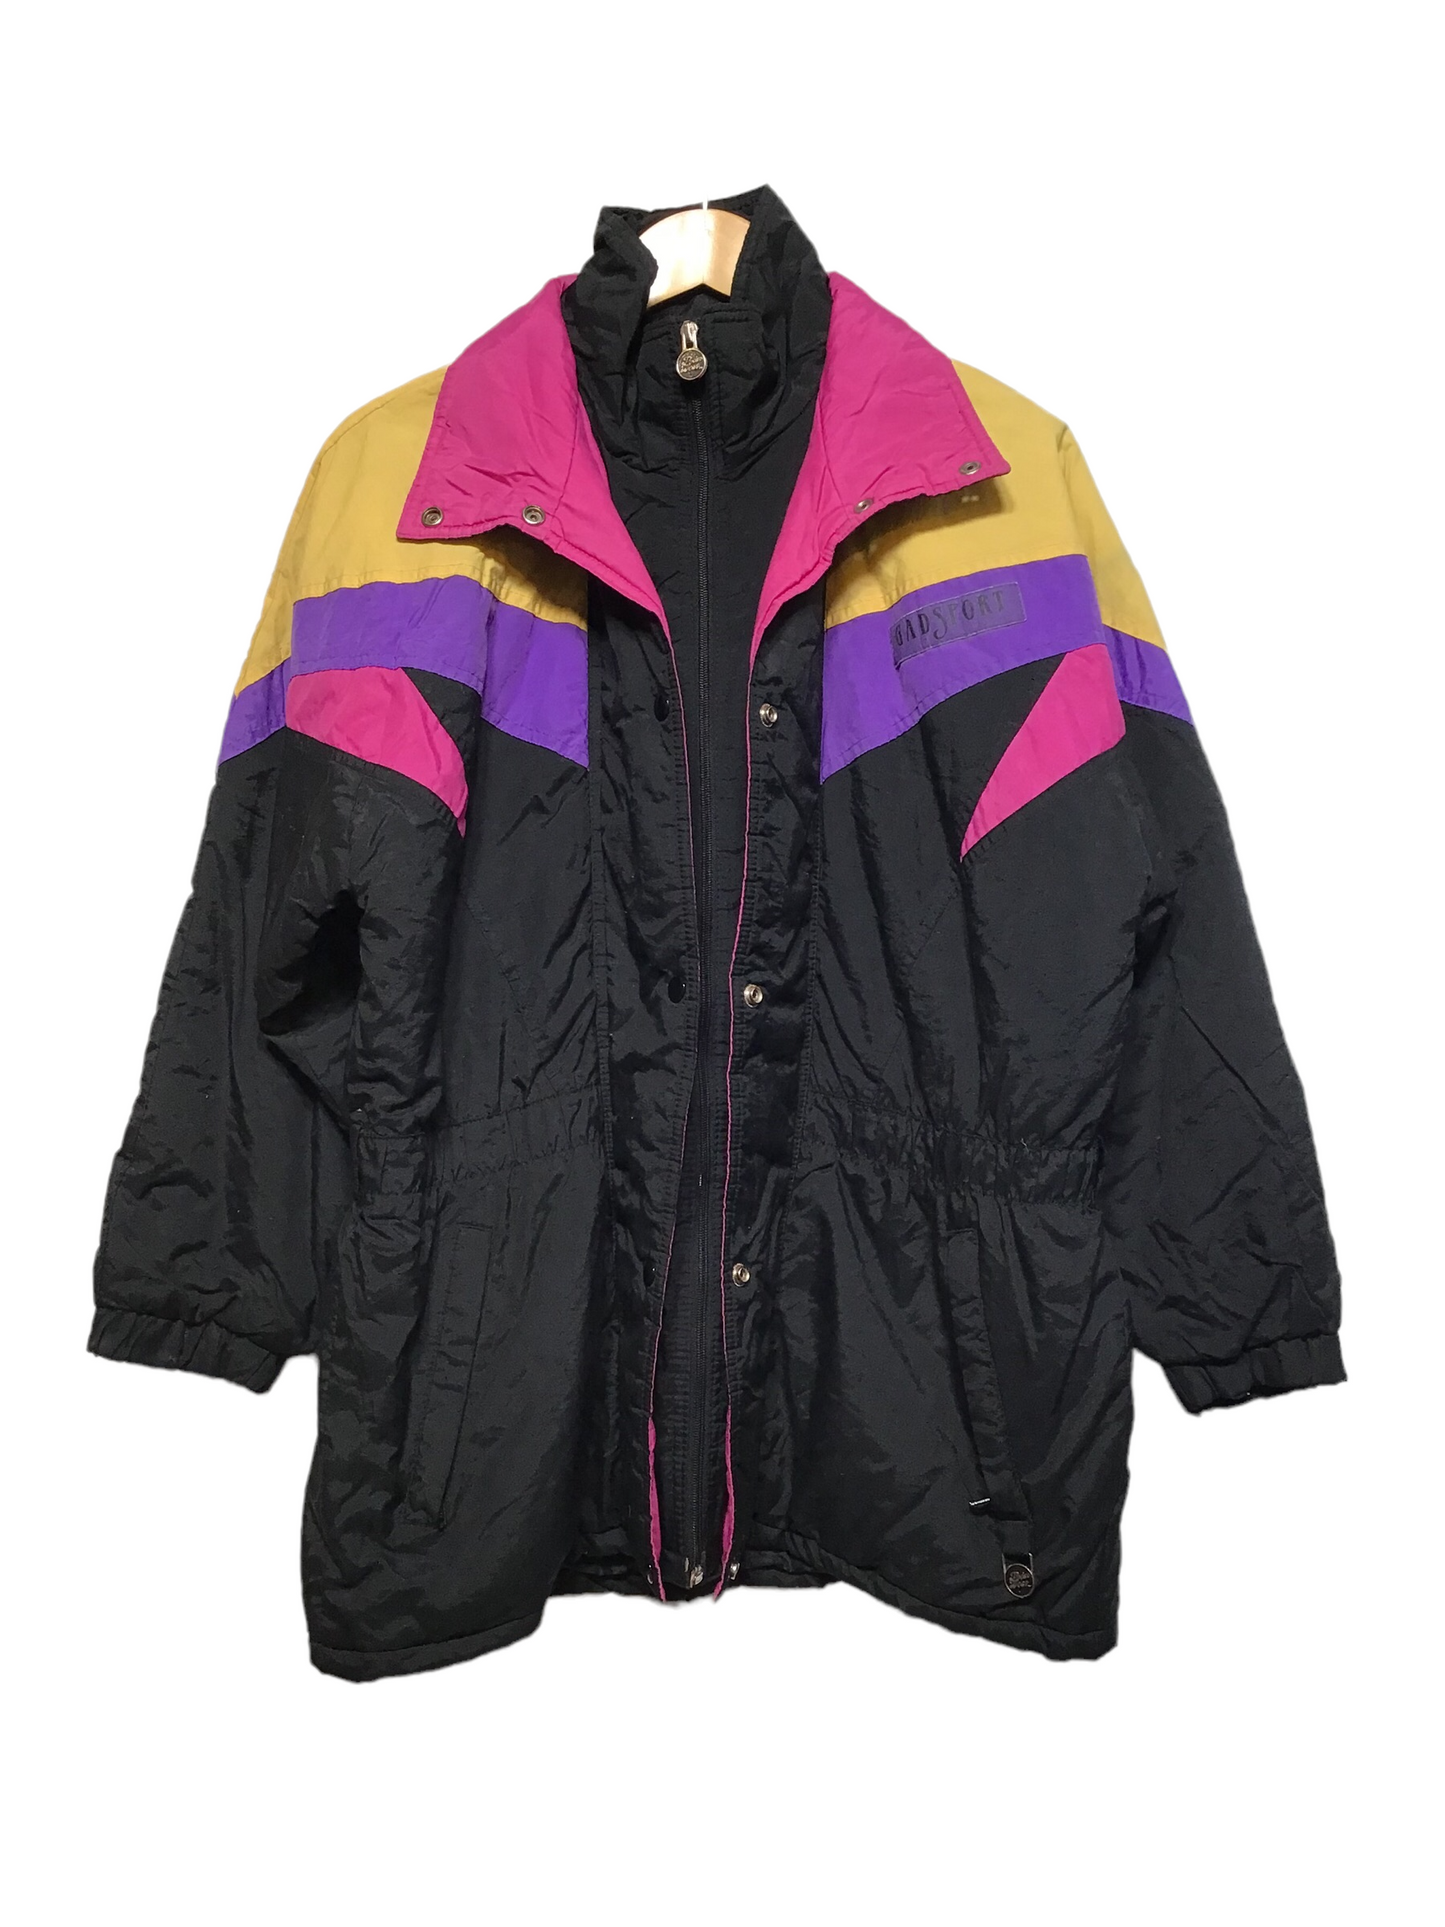 80s Ski Jacket (Size M)